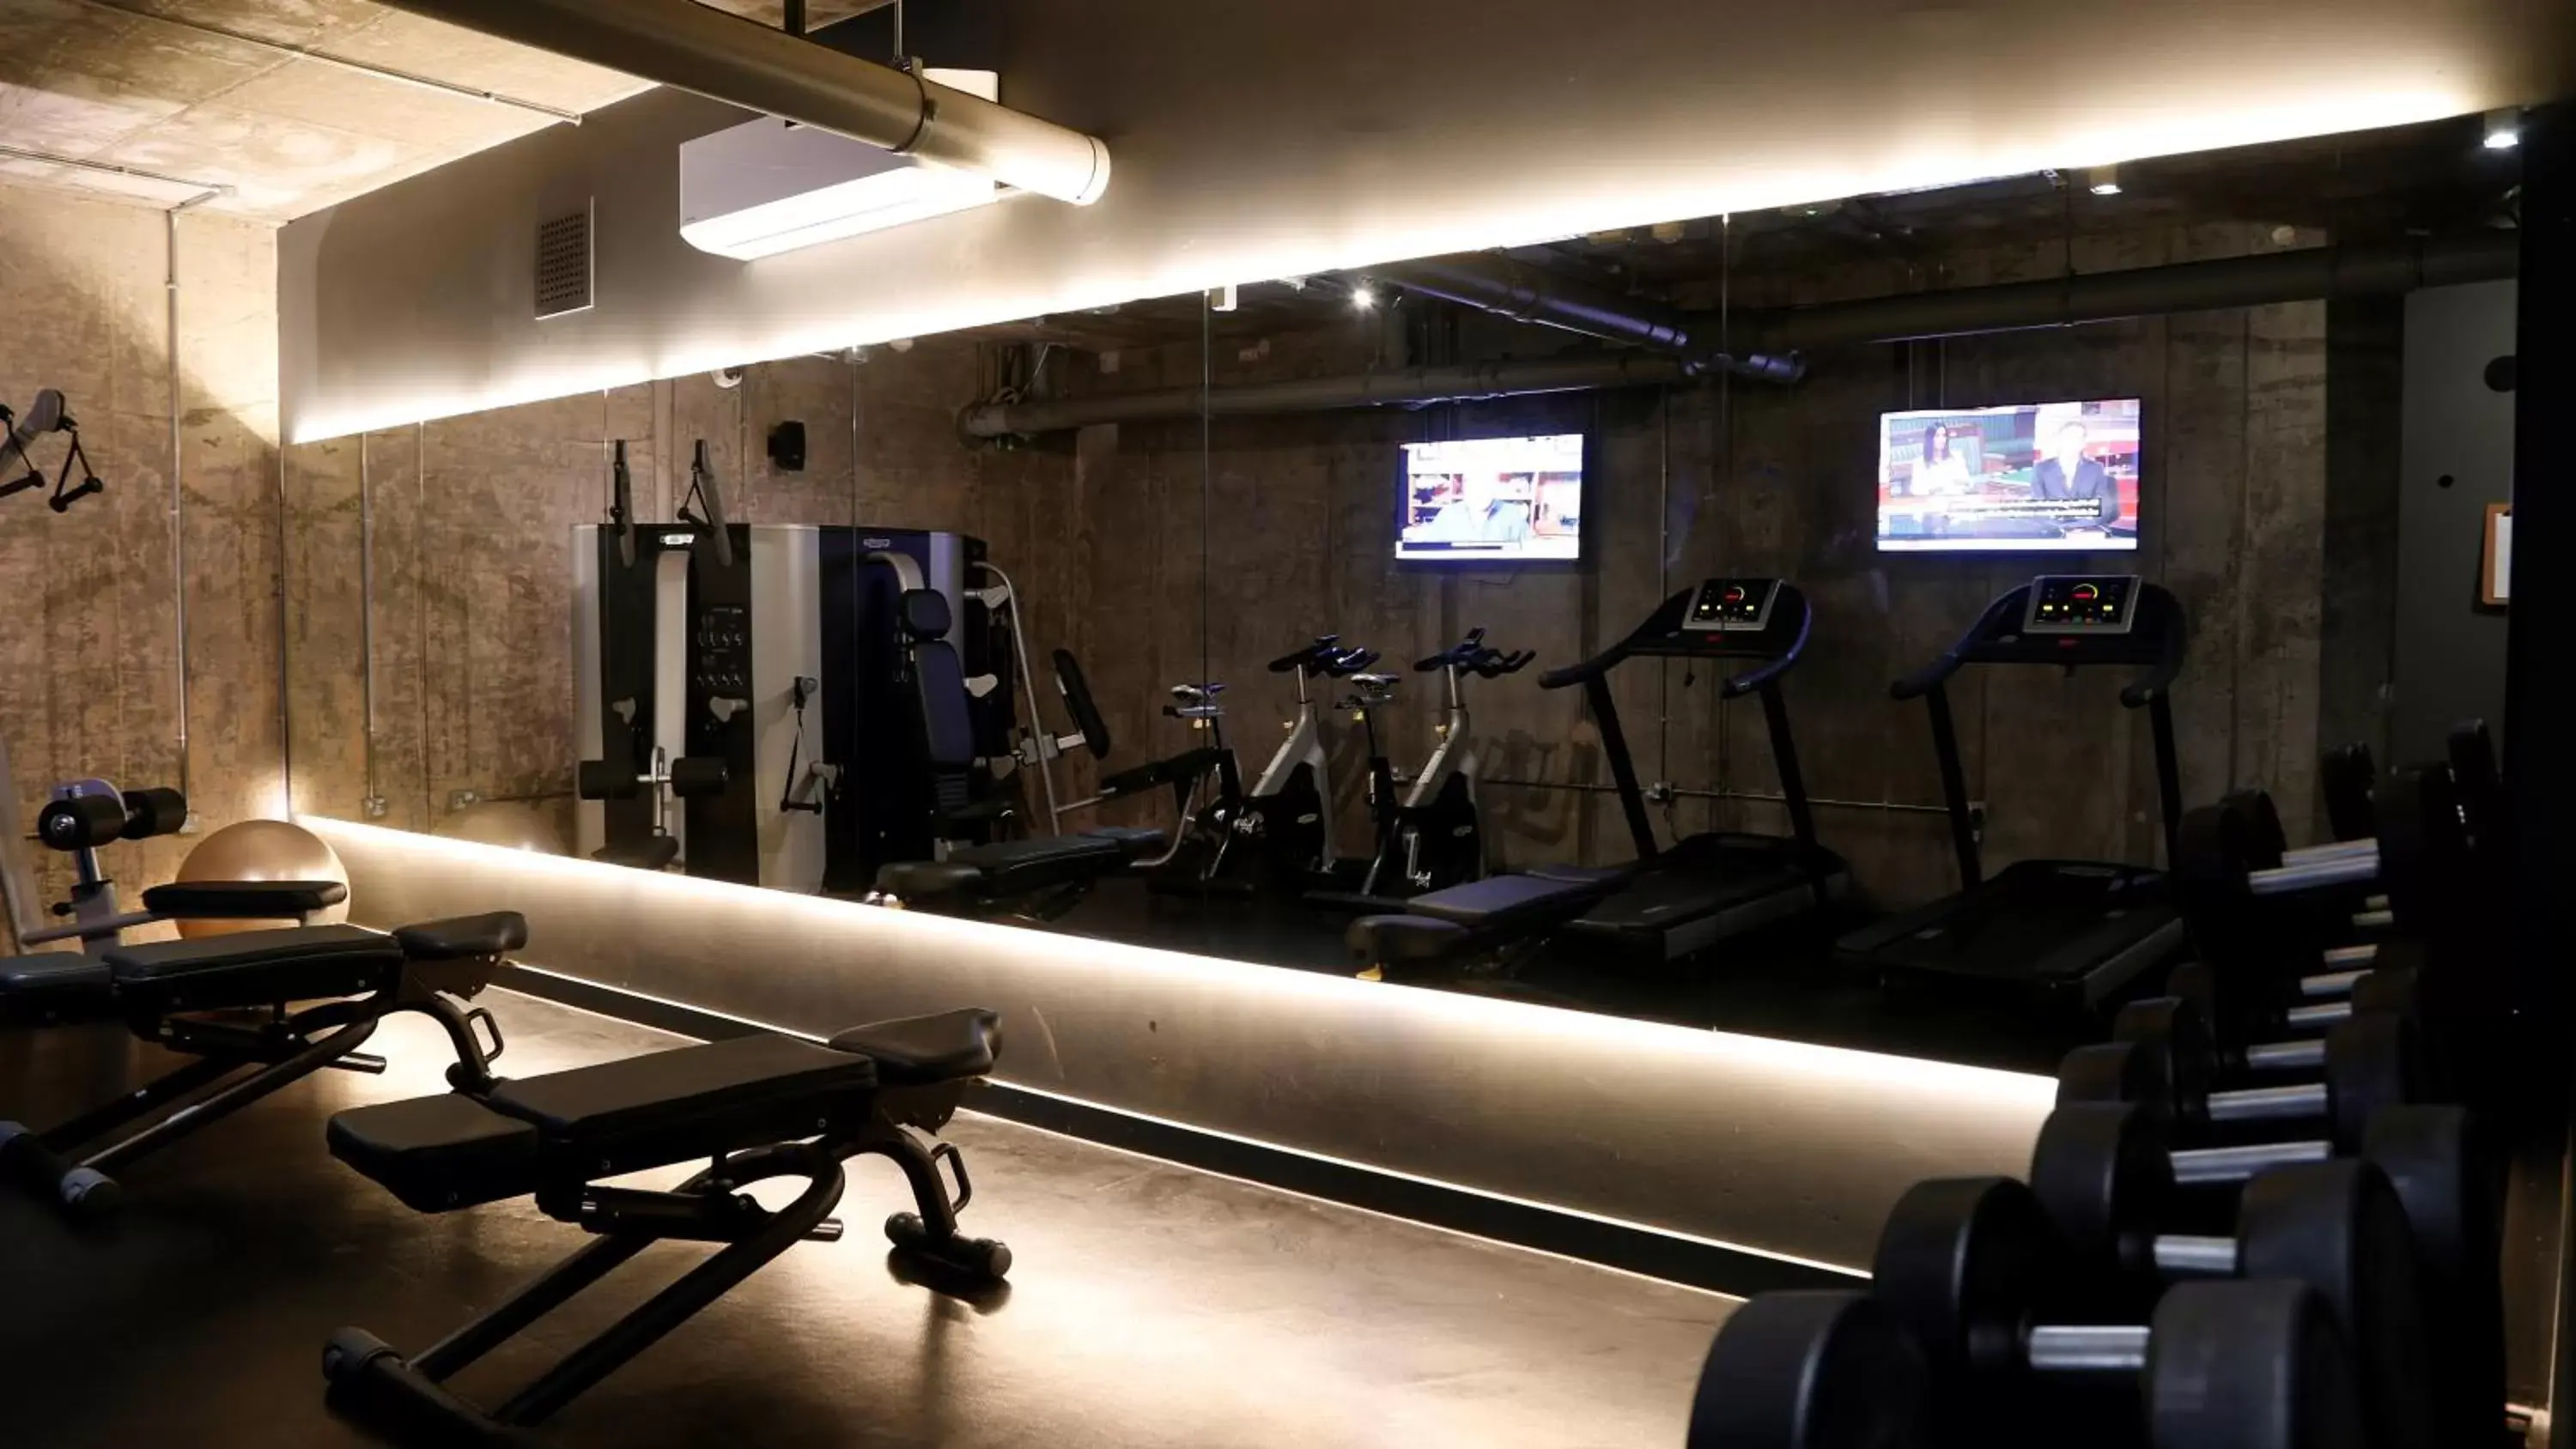 Fitness centre/facilities, Fitness Center/Facilities in Aparthotel Adagio London Brentford